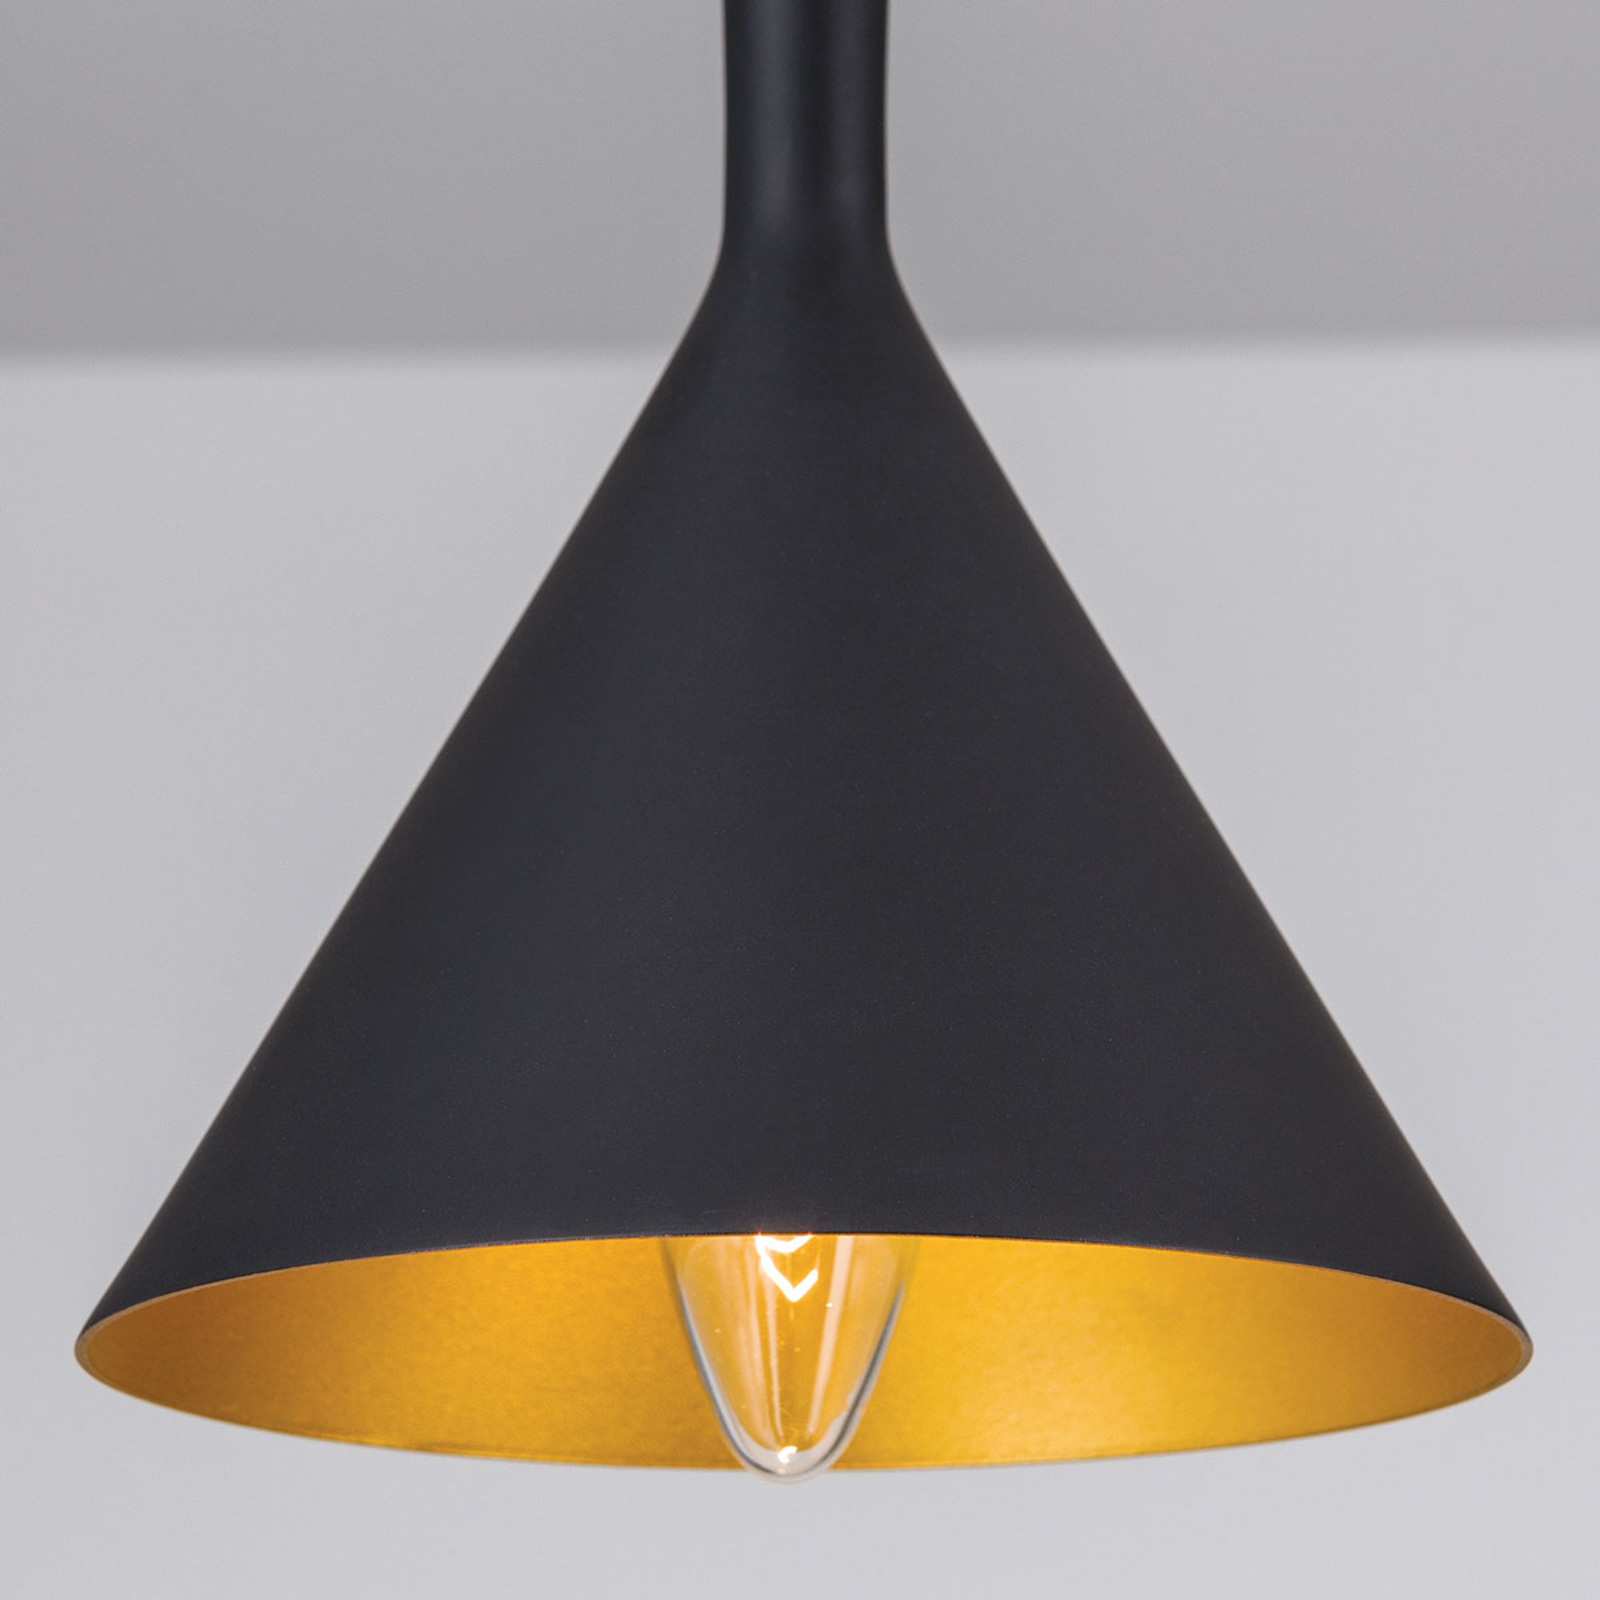 Cone-shaped hanging lamp Gunda in black and gold